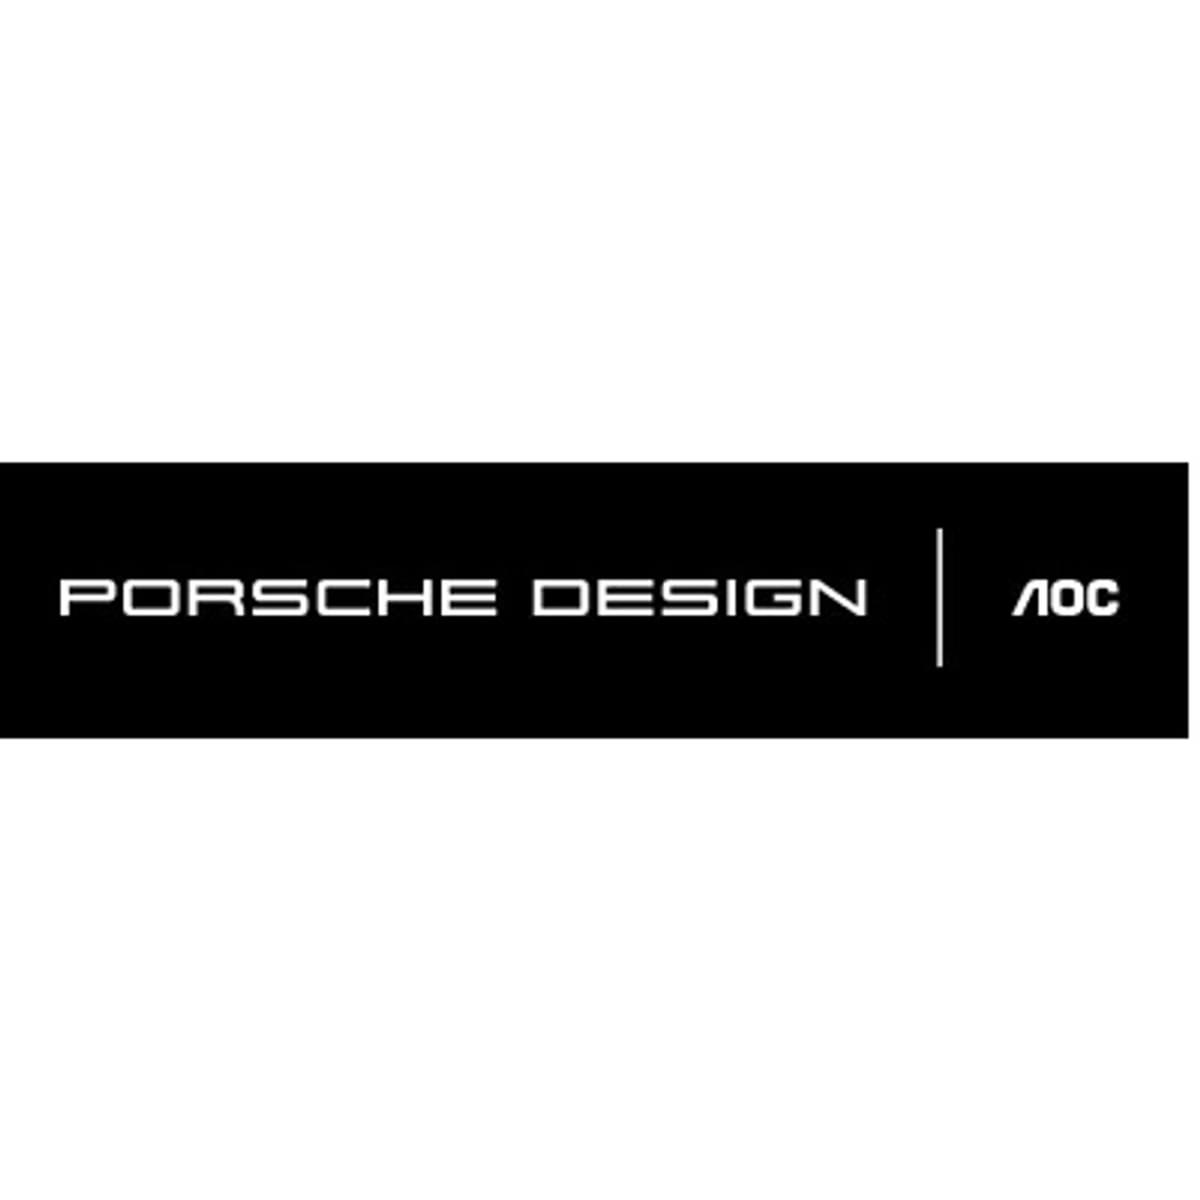 Porsche Design en AOC kondigen partnerschip aan image